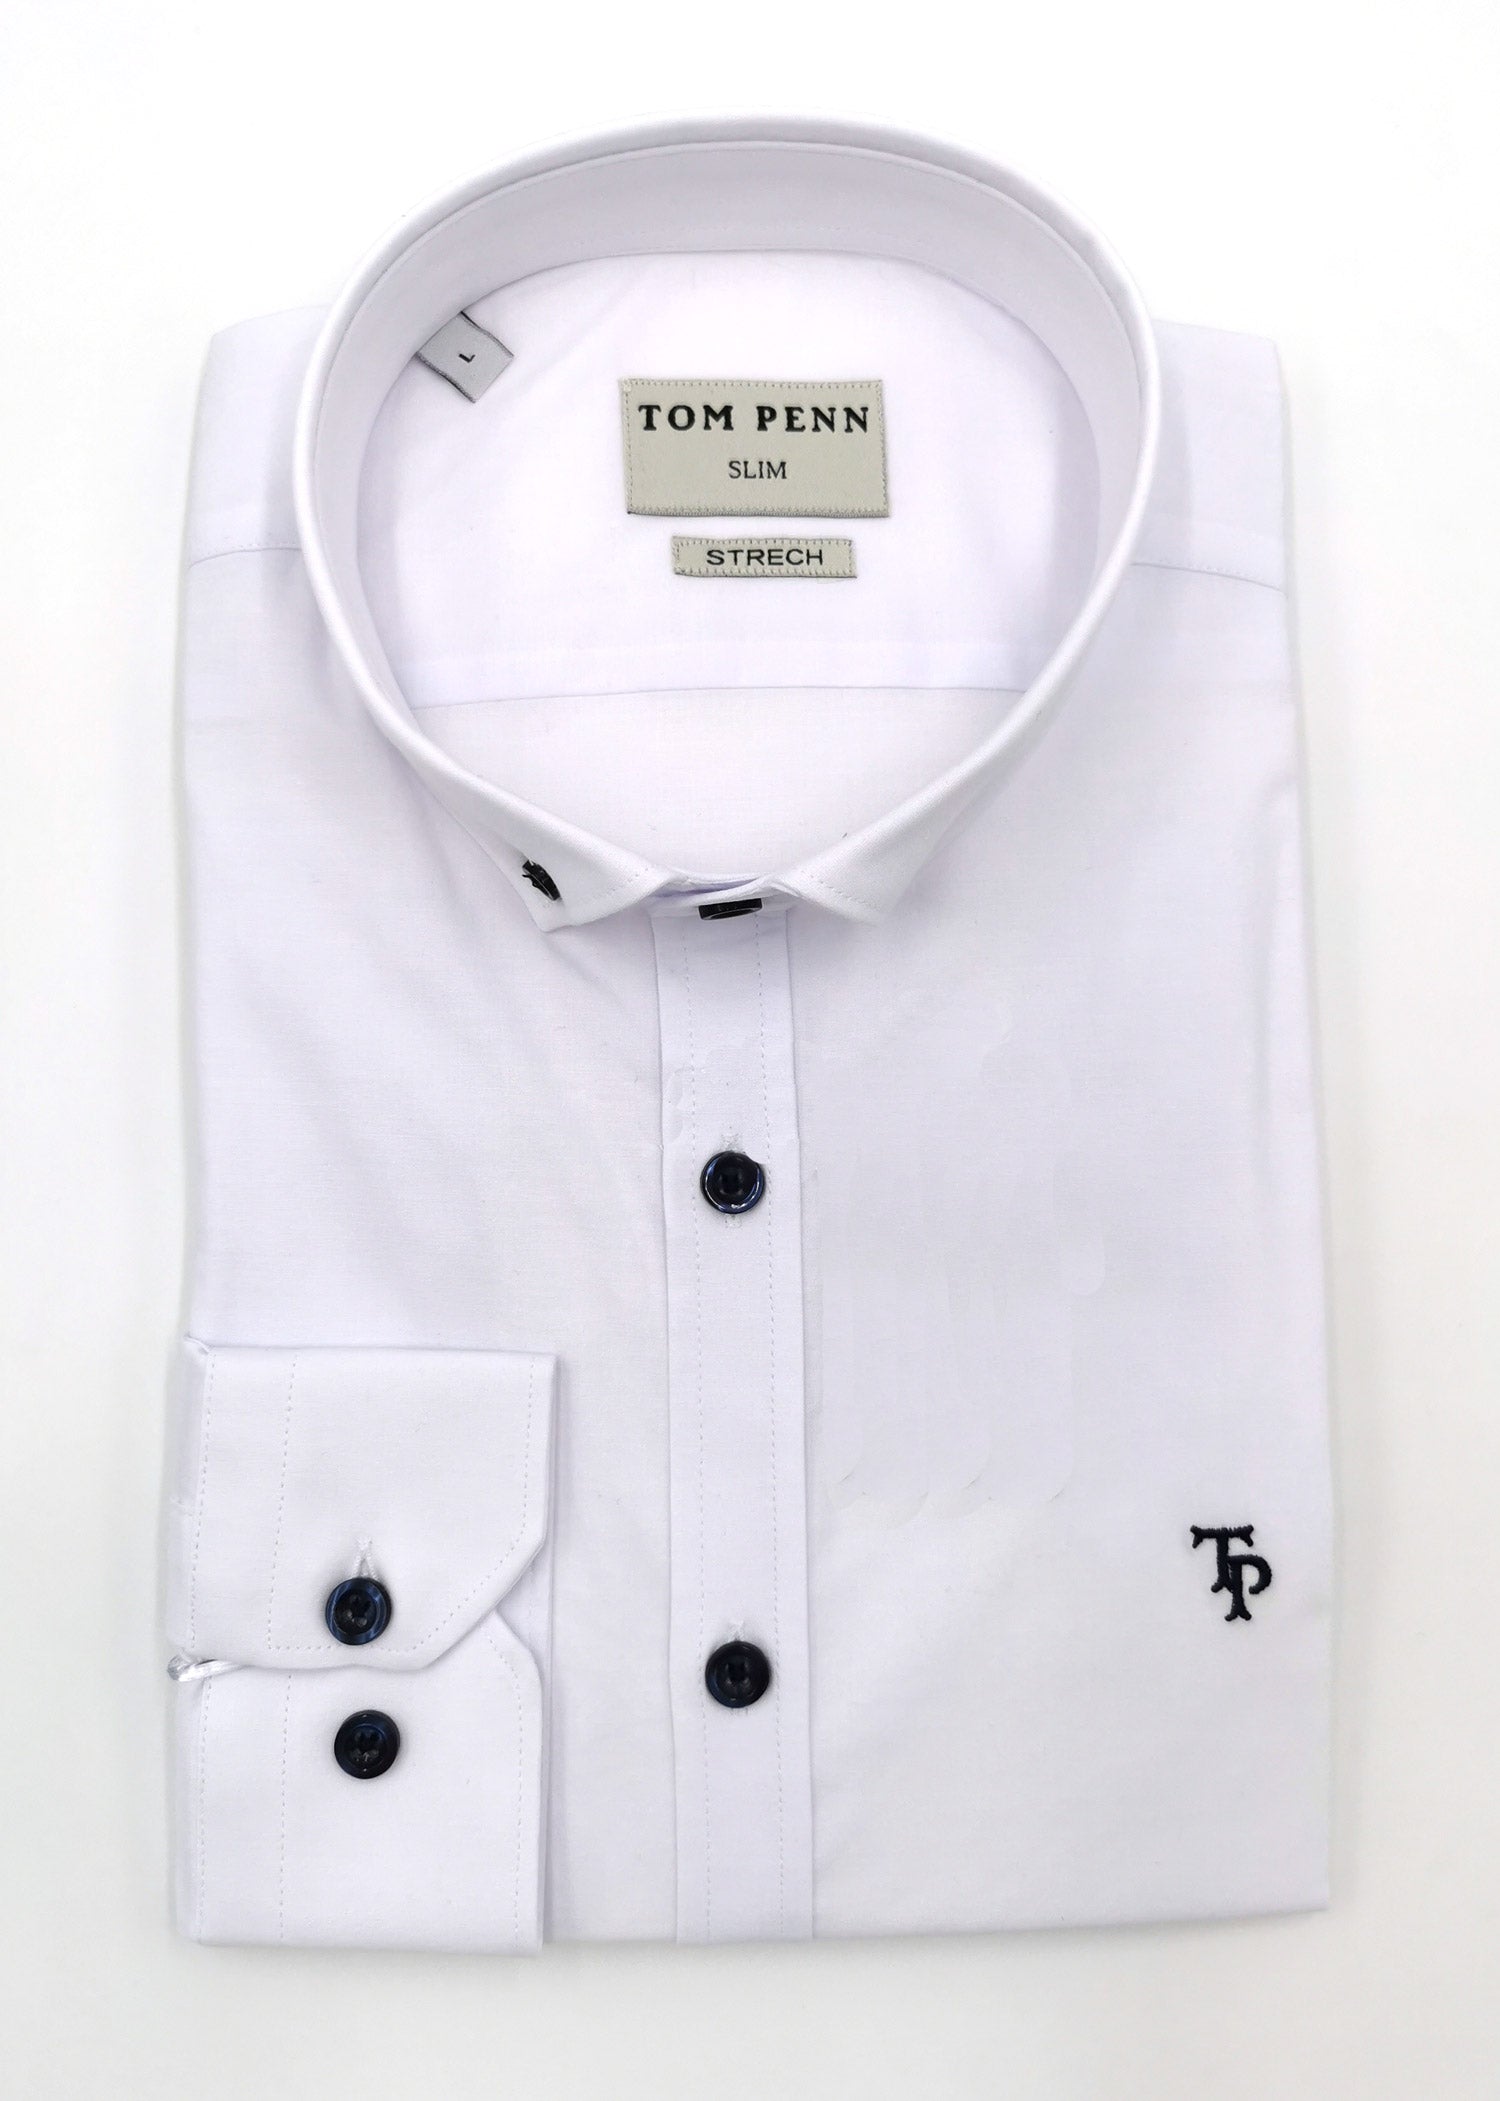 Tom Penn Button Down Slim Fit Shirt - Spirit Clothing